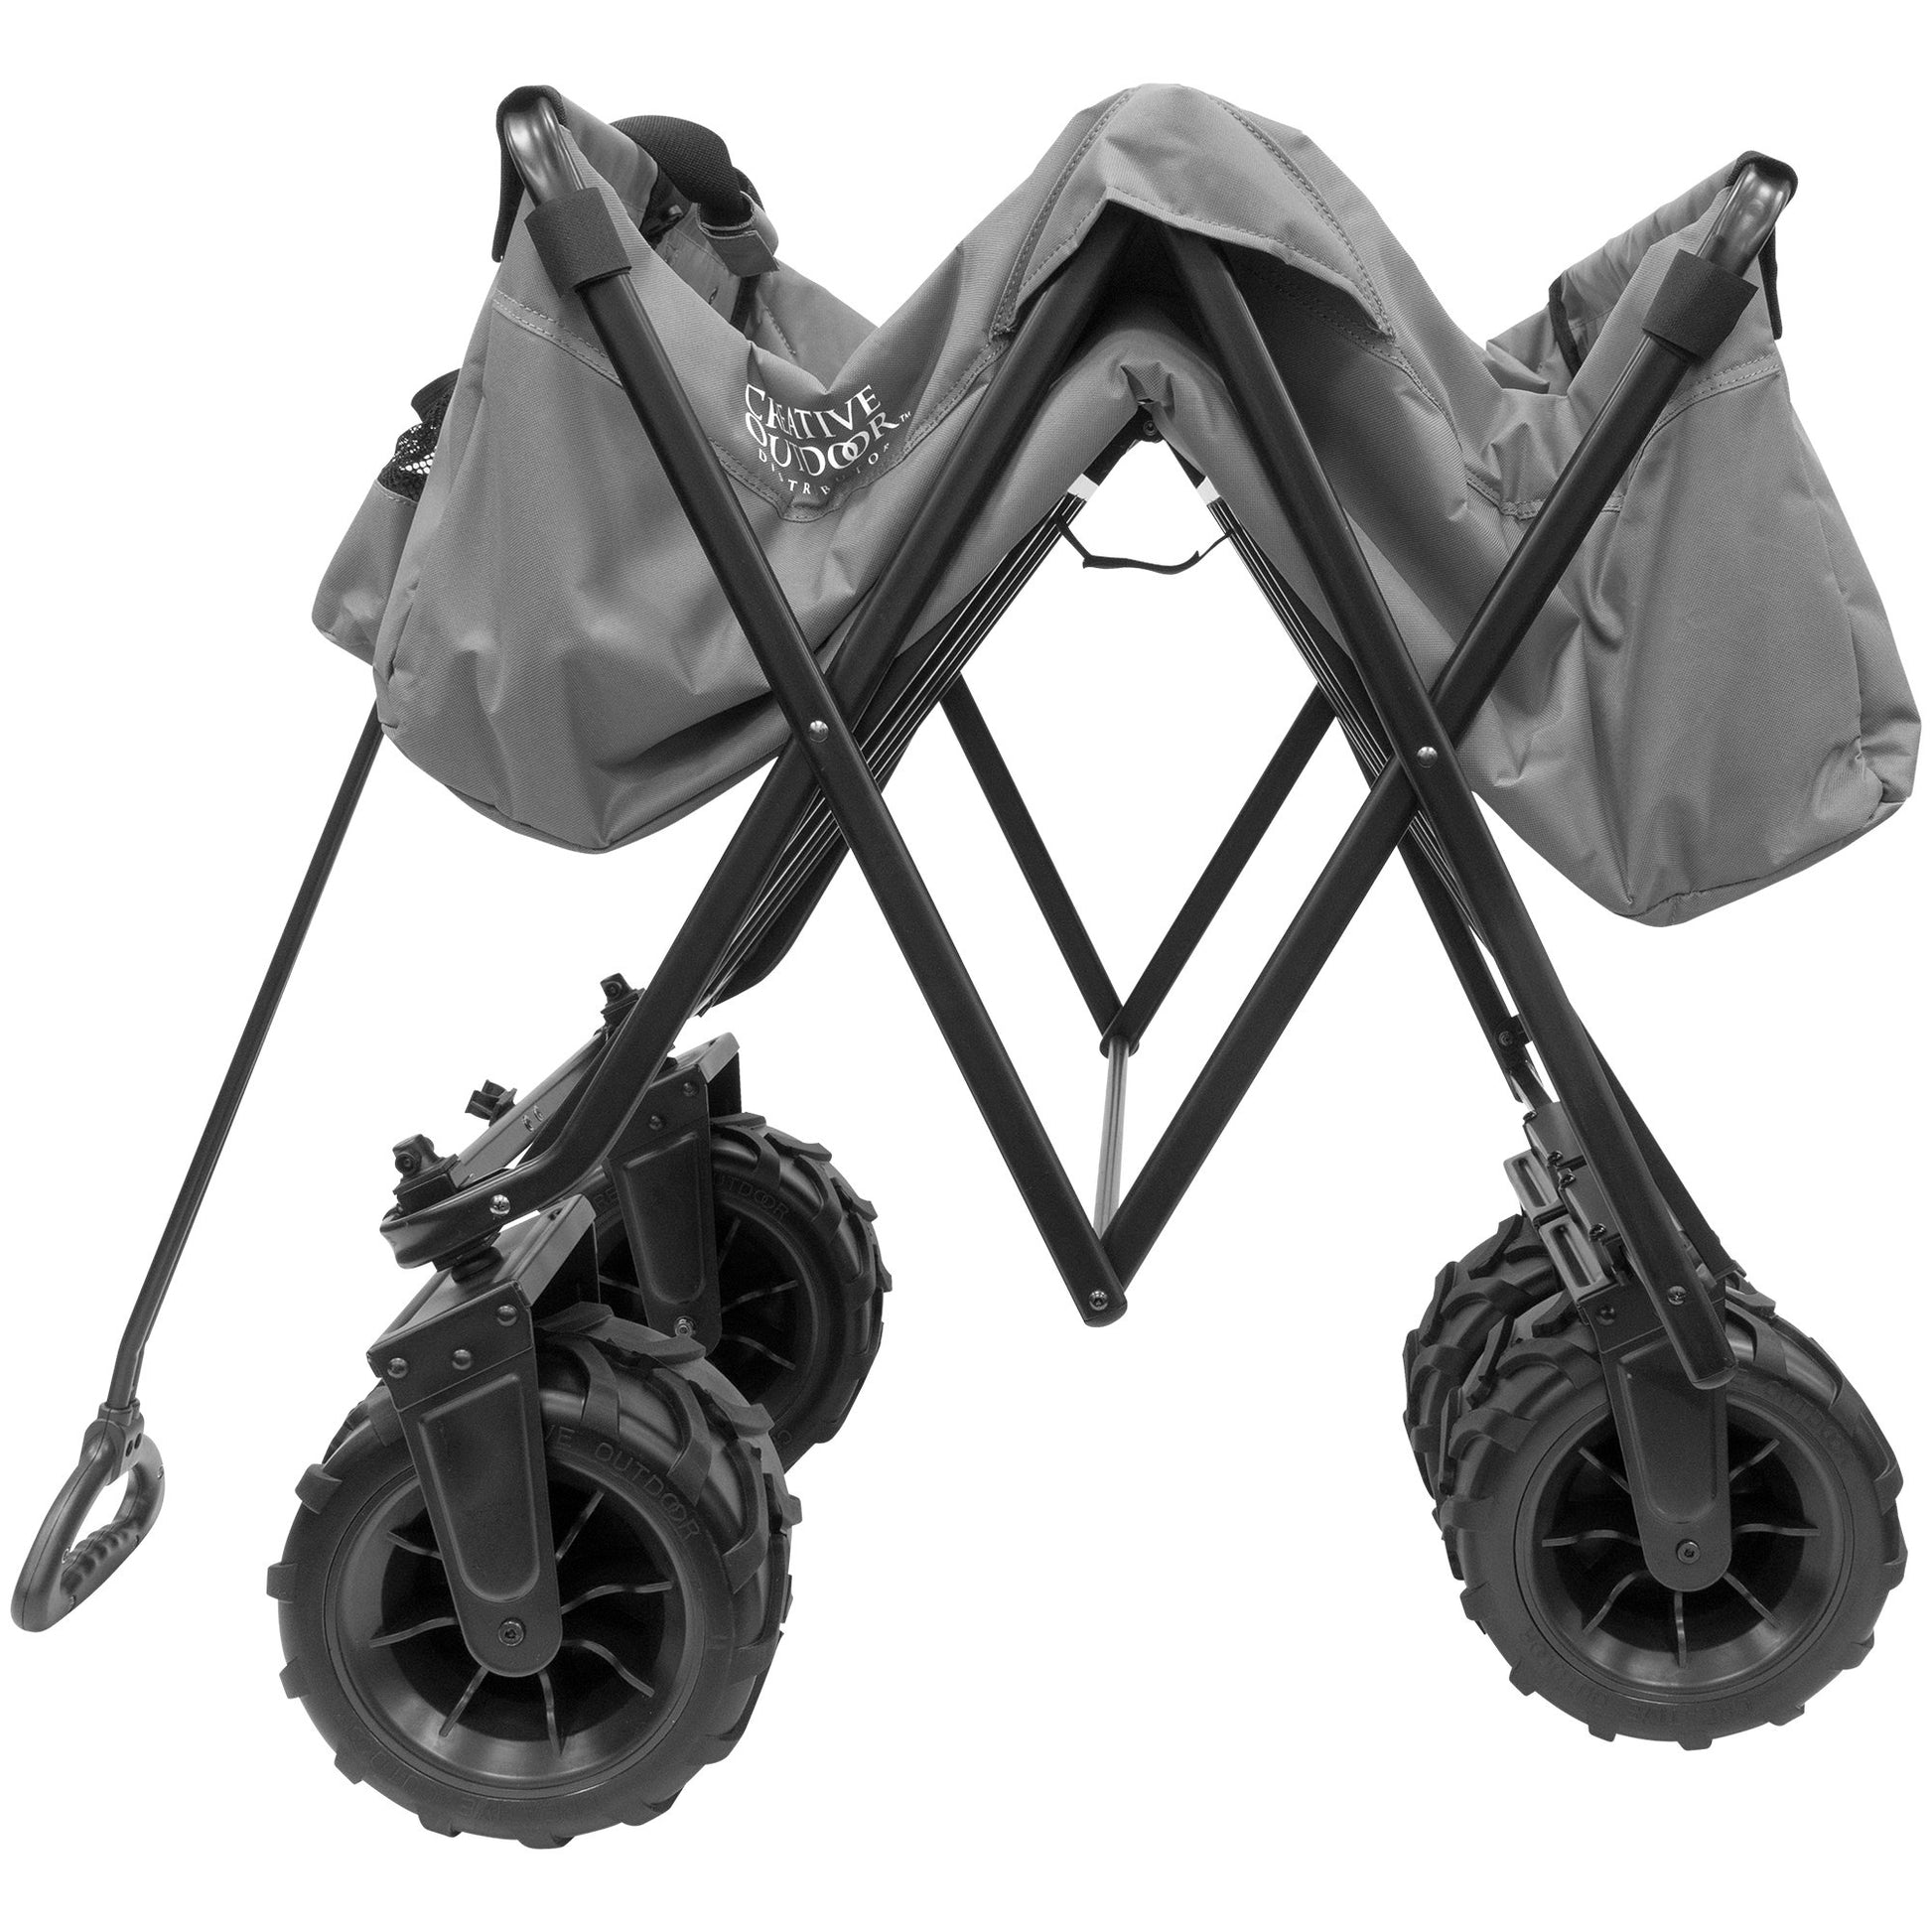 xxxl-monster-all-terrain-folding-wagon-gray